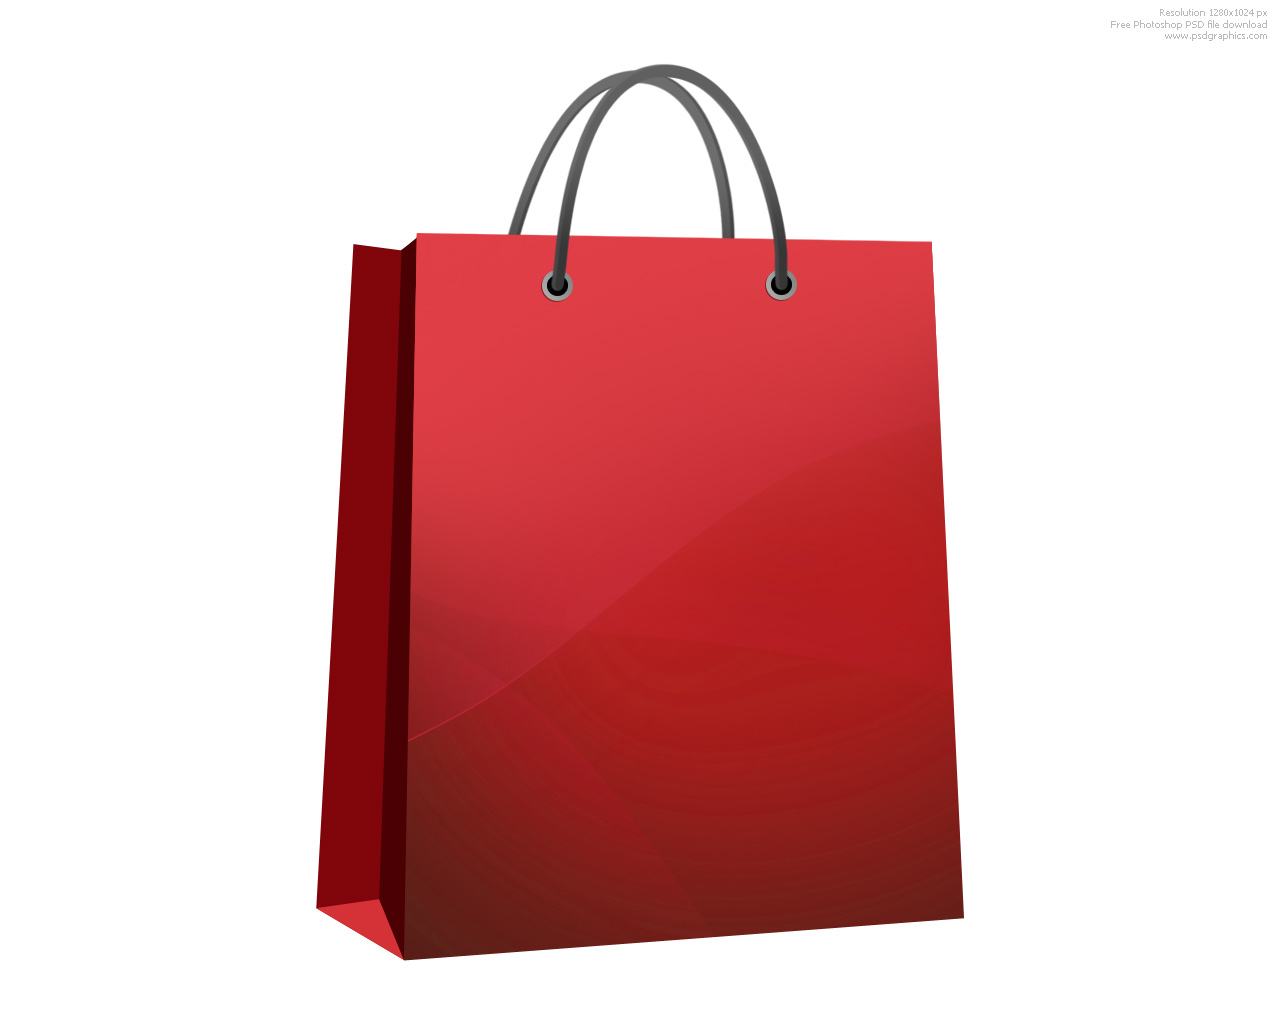 Shopping Bag Clip Art - Clipart library